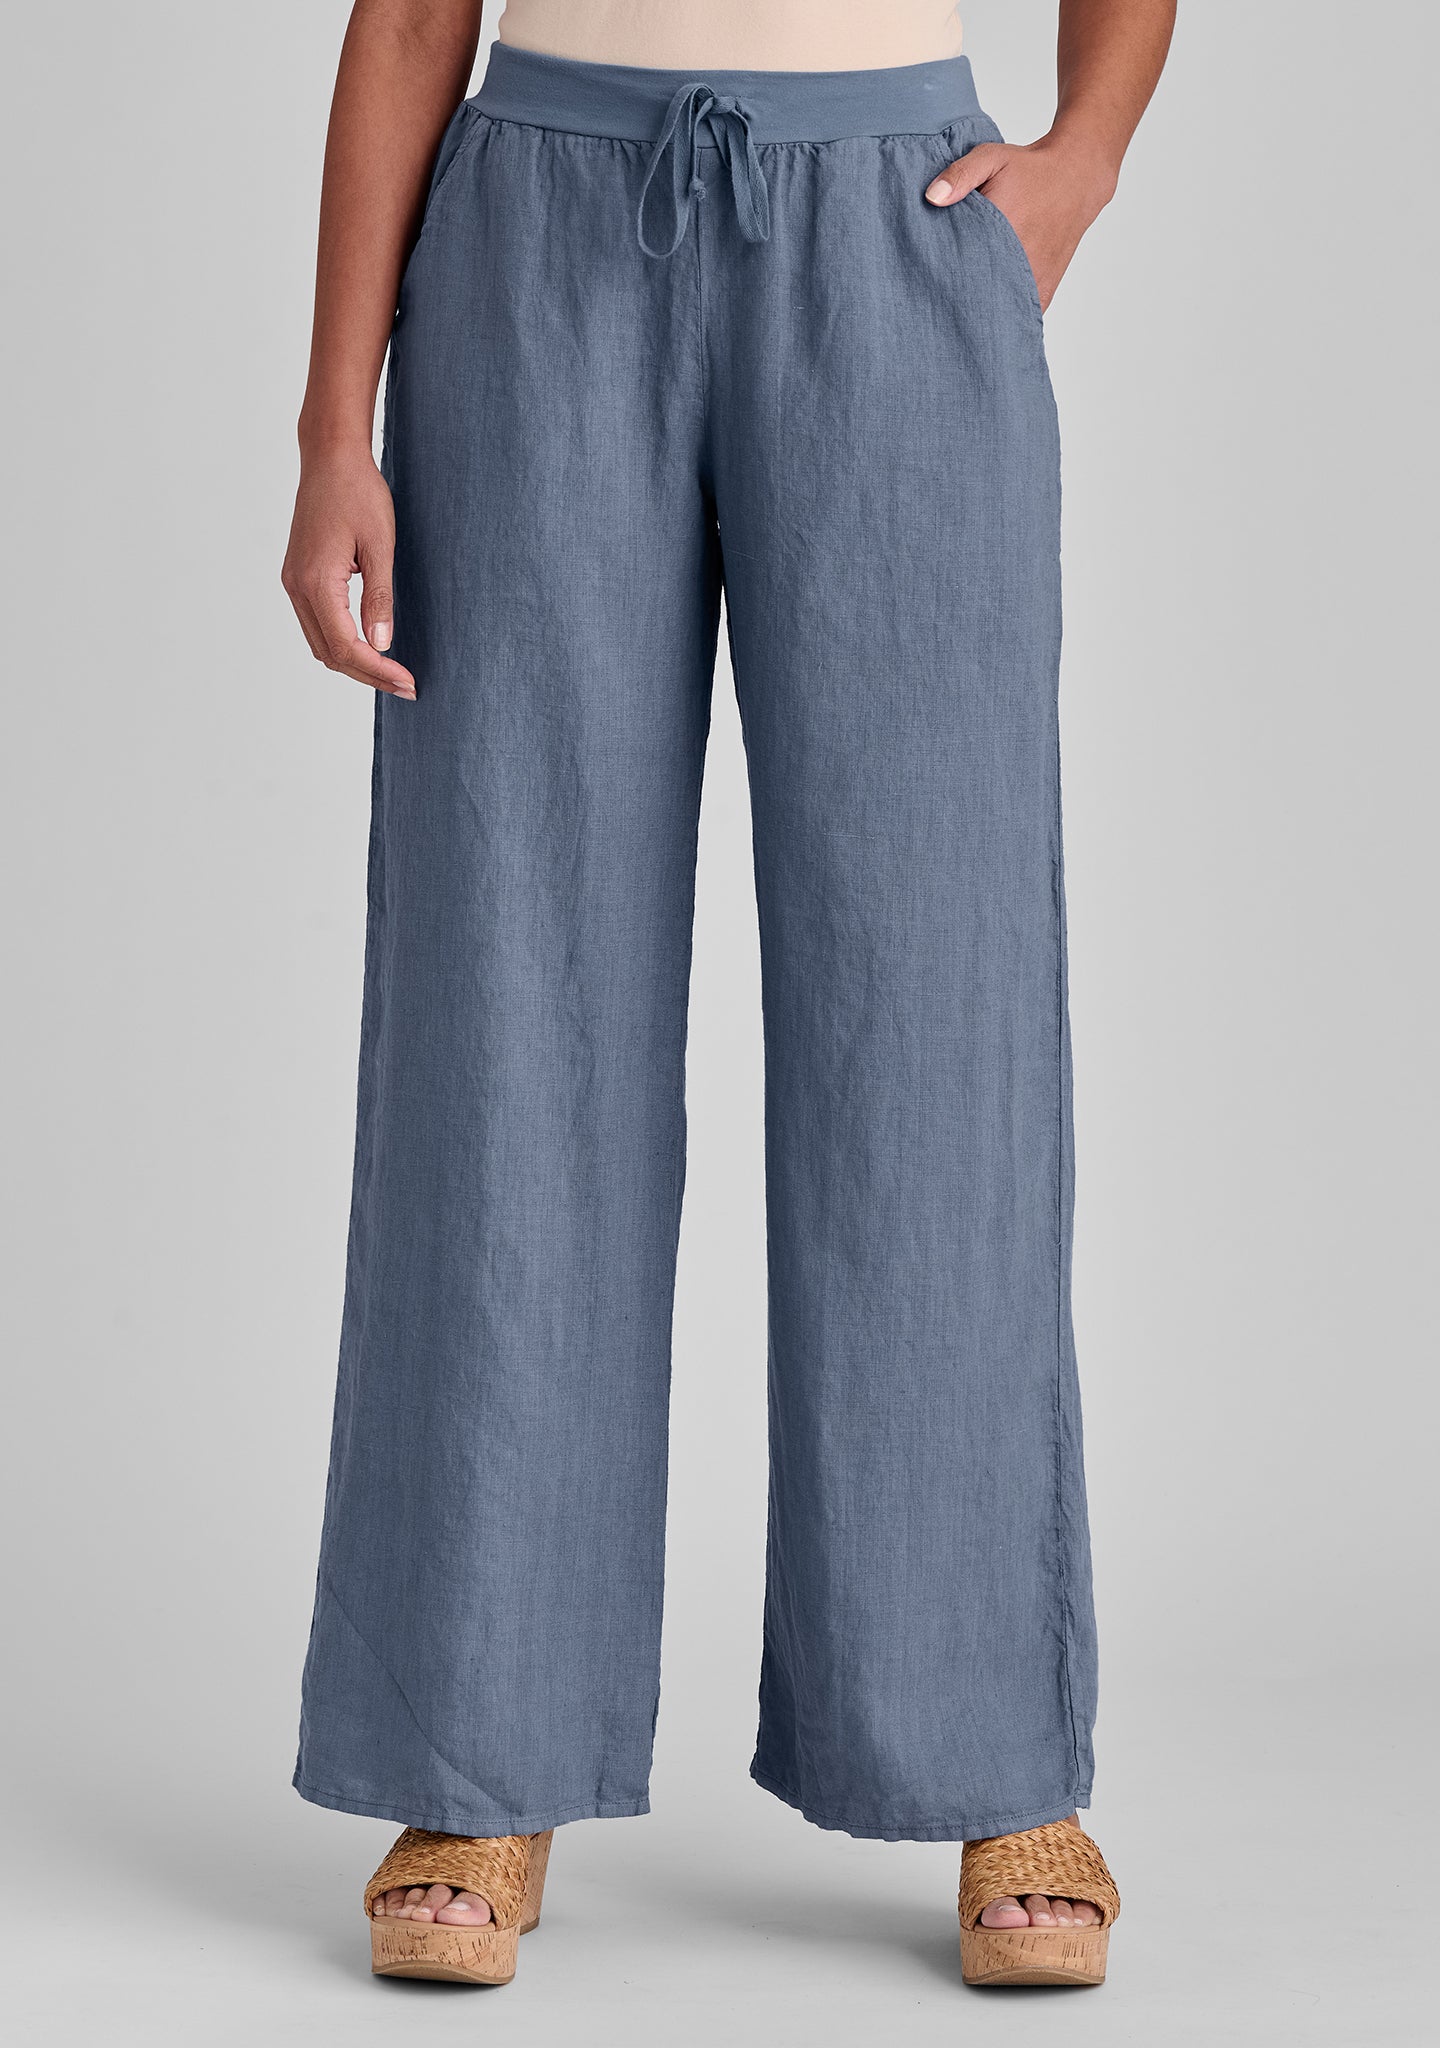 flat iron pant linen drawstring pants details